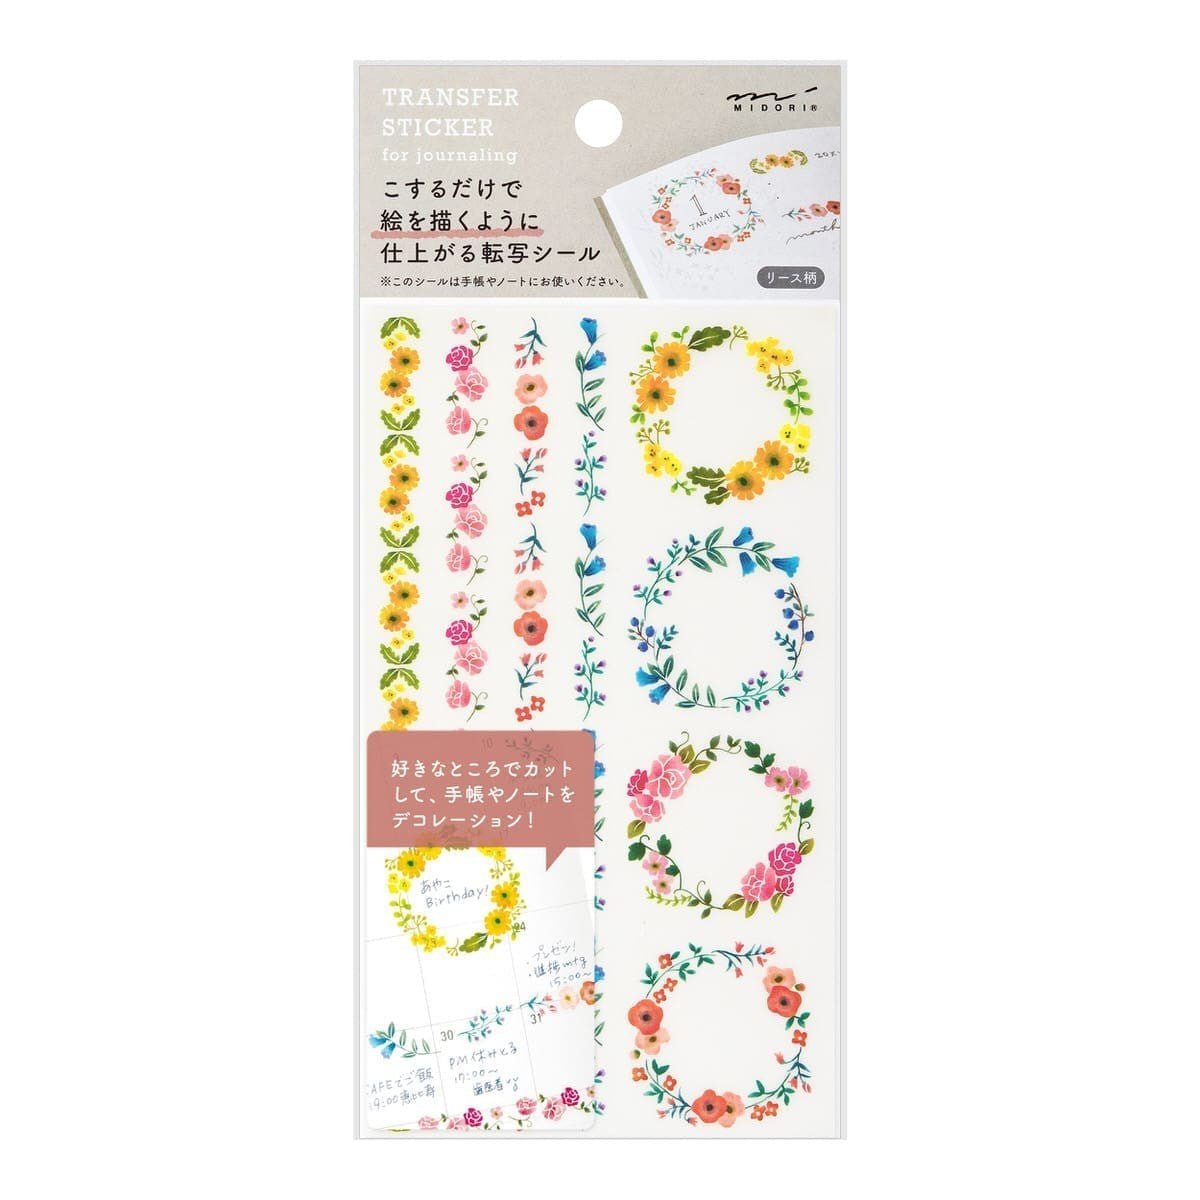 Transfer sticker for journaling - Wreaths - Midori - Tidformera